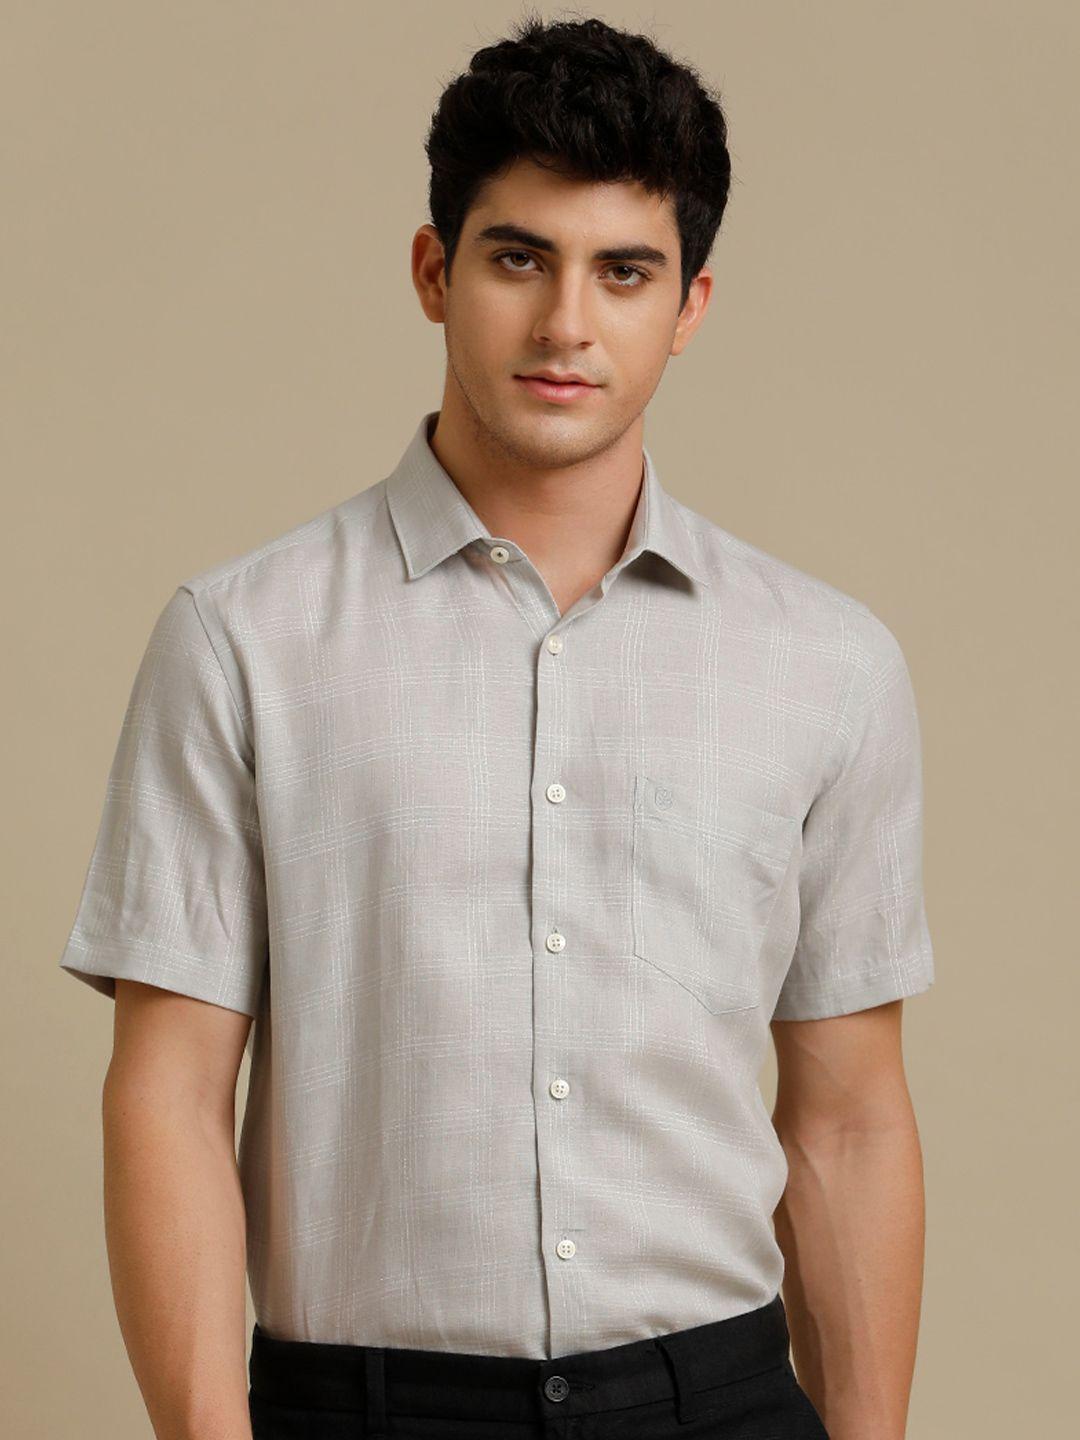 linen club spread collar short sleeves regular fit contemporary opaque checks casual shirt